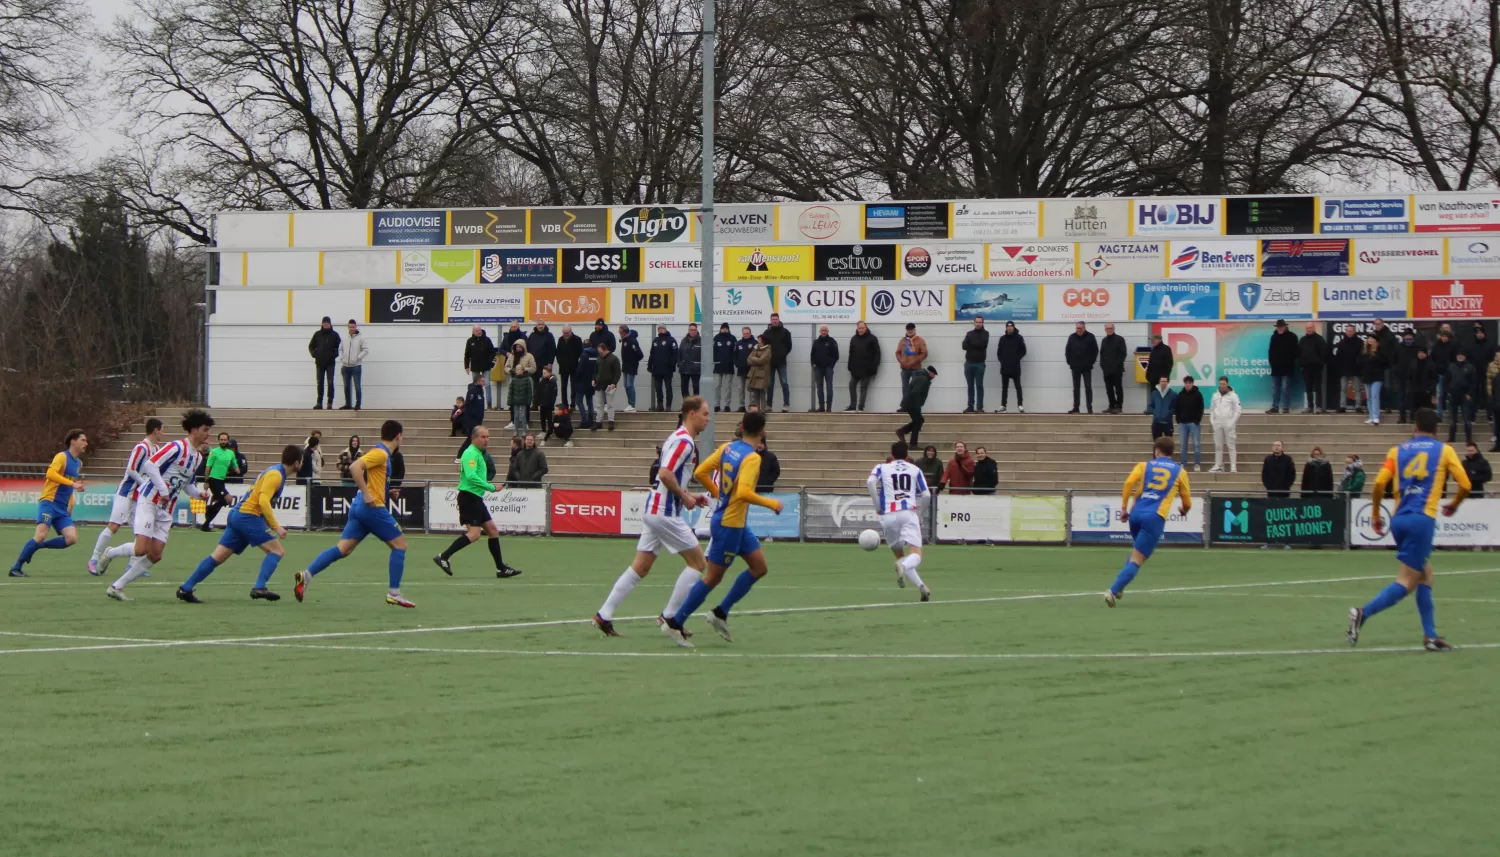 UDI’19 hekkensluiter na benauwde derbyzege Blauw Geel’38 (1-0)